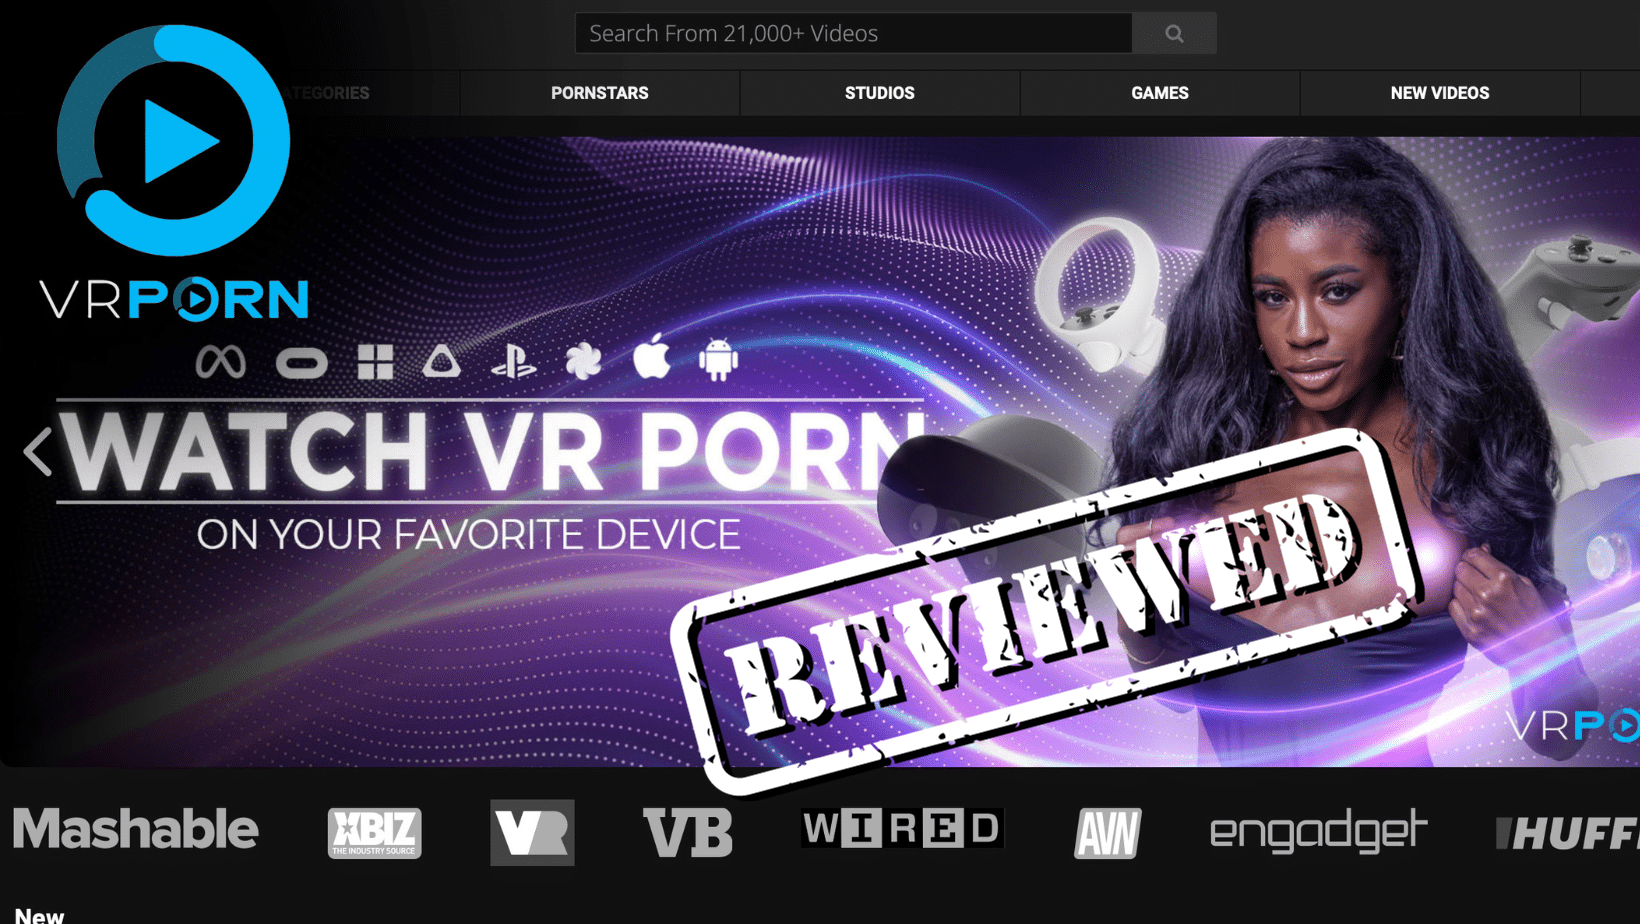 VRPorn.com Review: Is It a Legit VR Porn Site?